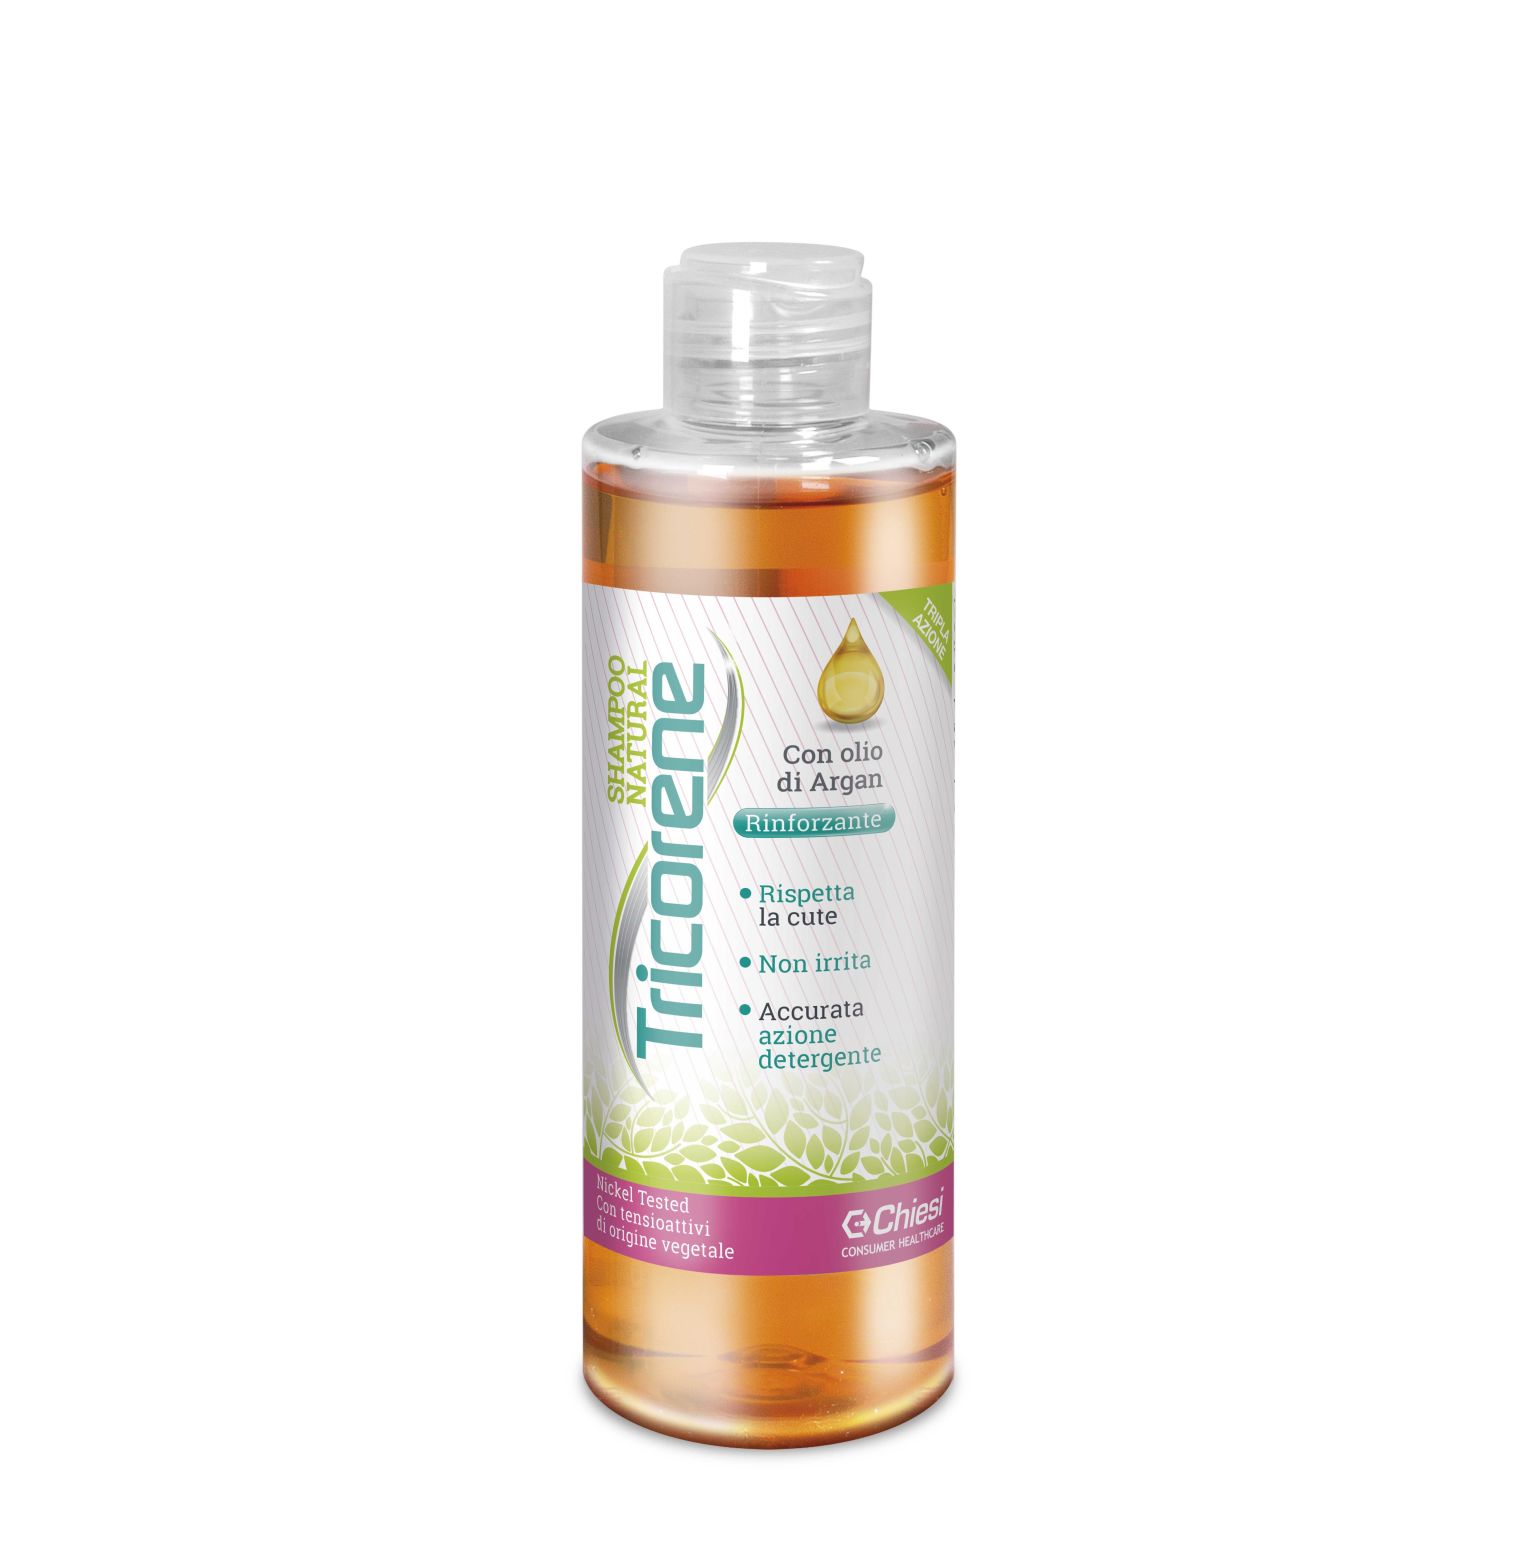 976905998 - Tricorene Shampoo Natural Rinforzante 210ml - 7894967_2.jpg